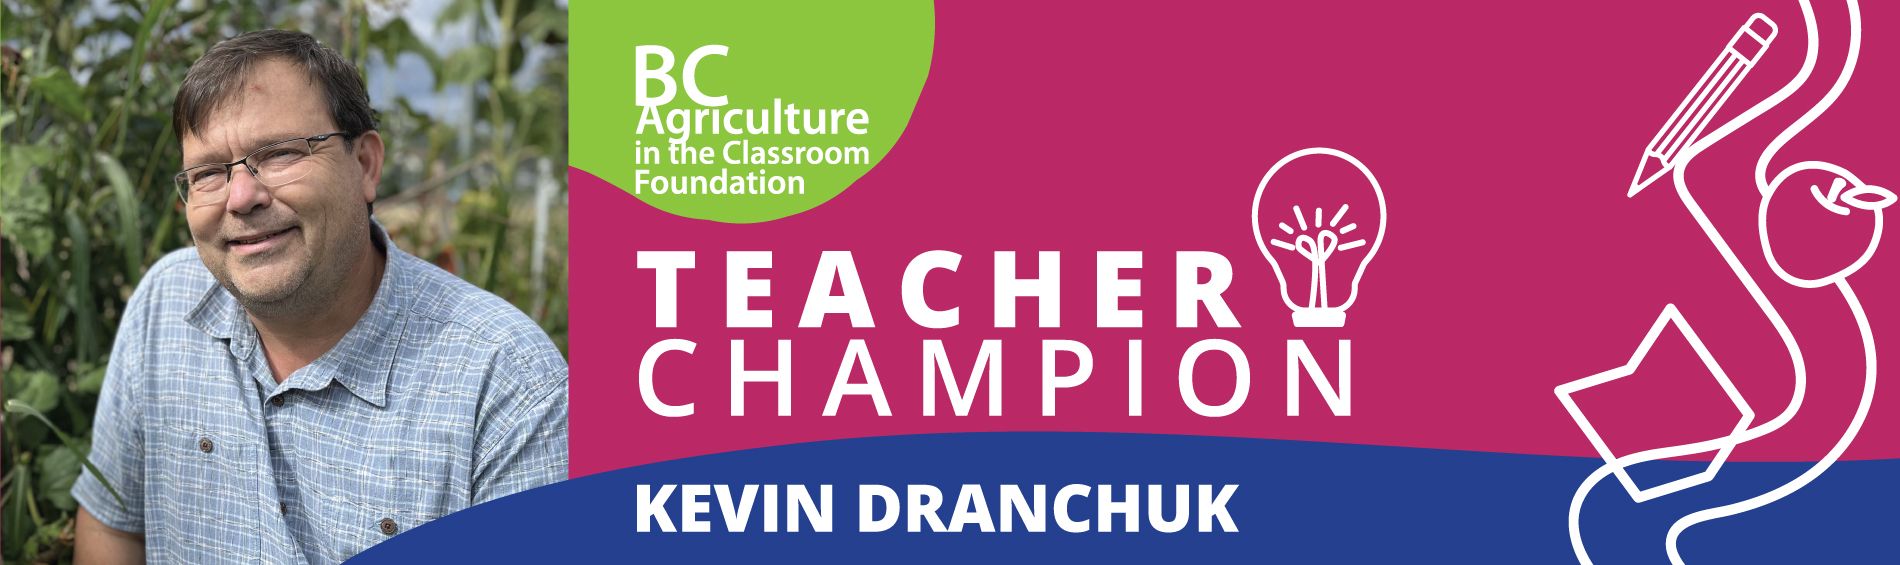 Teacher Champion - Kevin Dranchuk